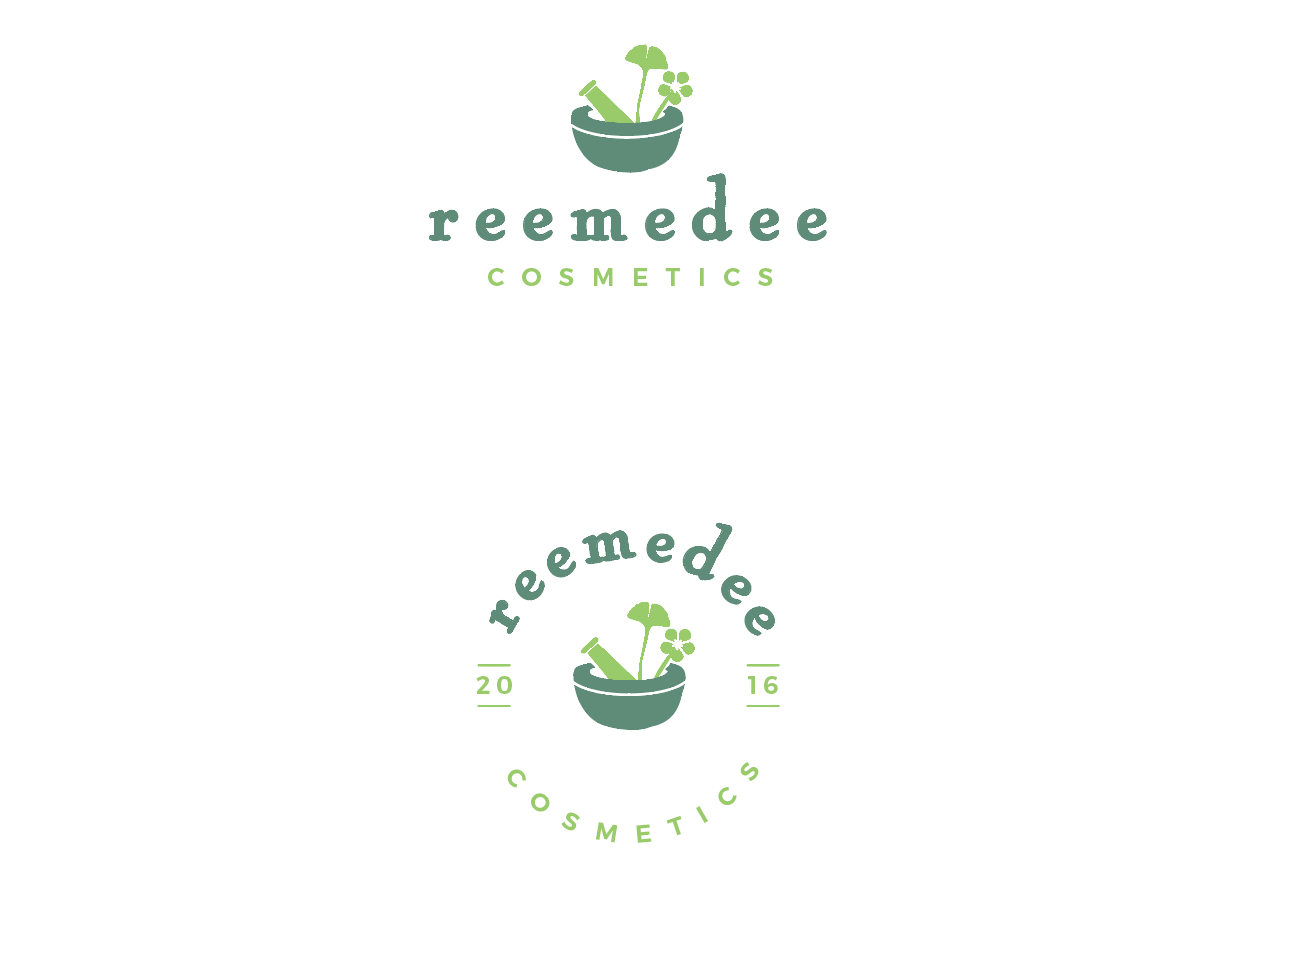 German Cosmetic Company Logo - Personable, Elegant, Cosmetics Logo Design for reemedee by ...